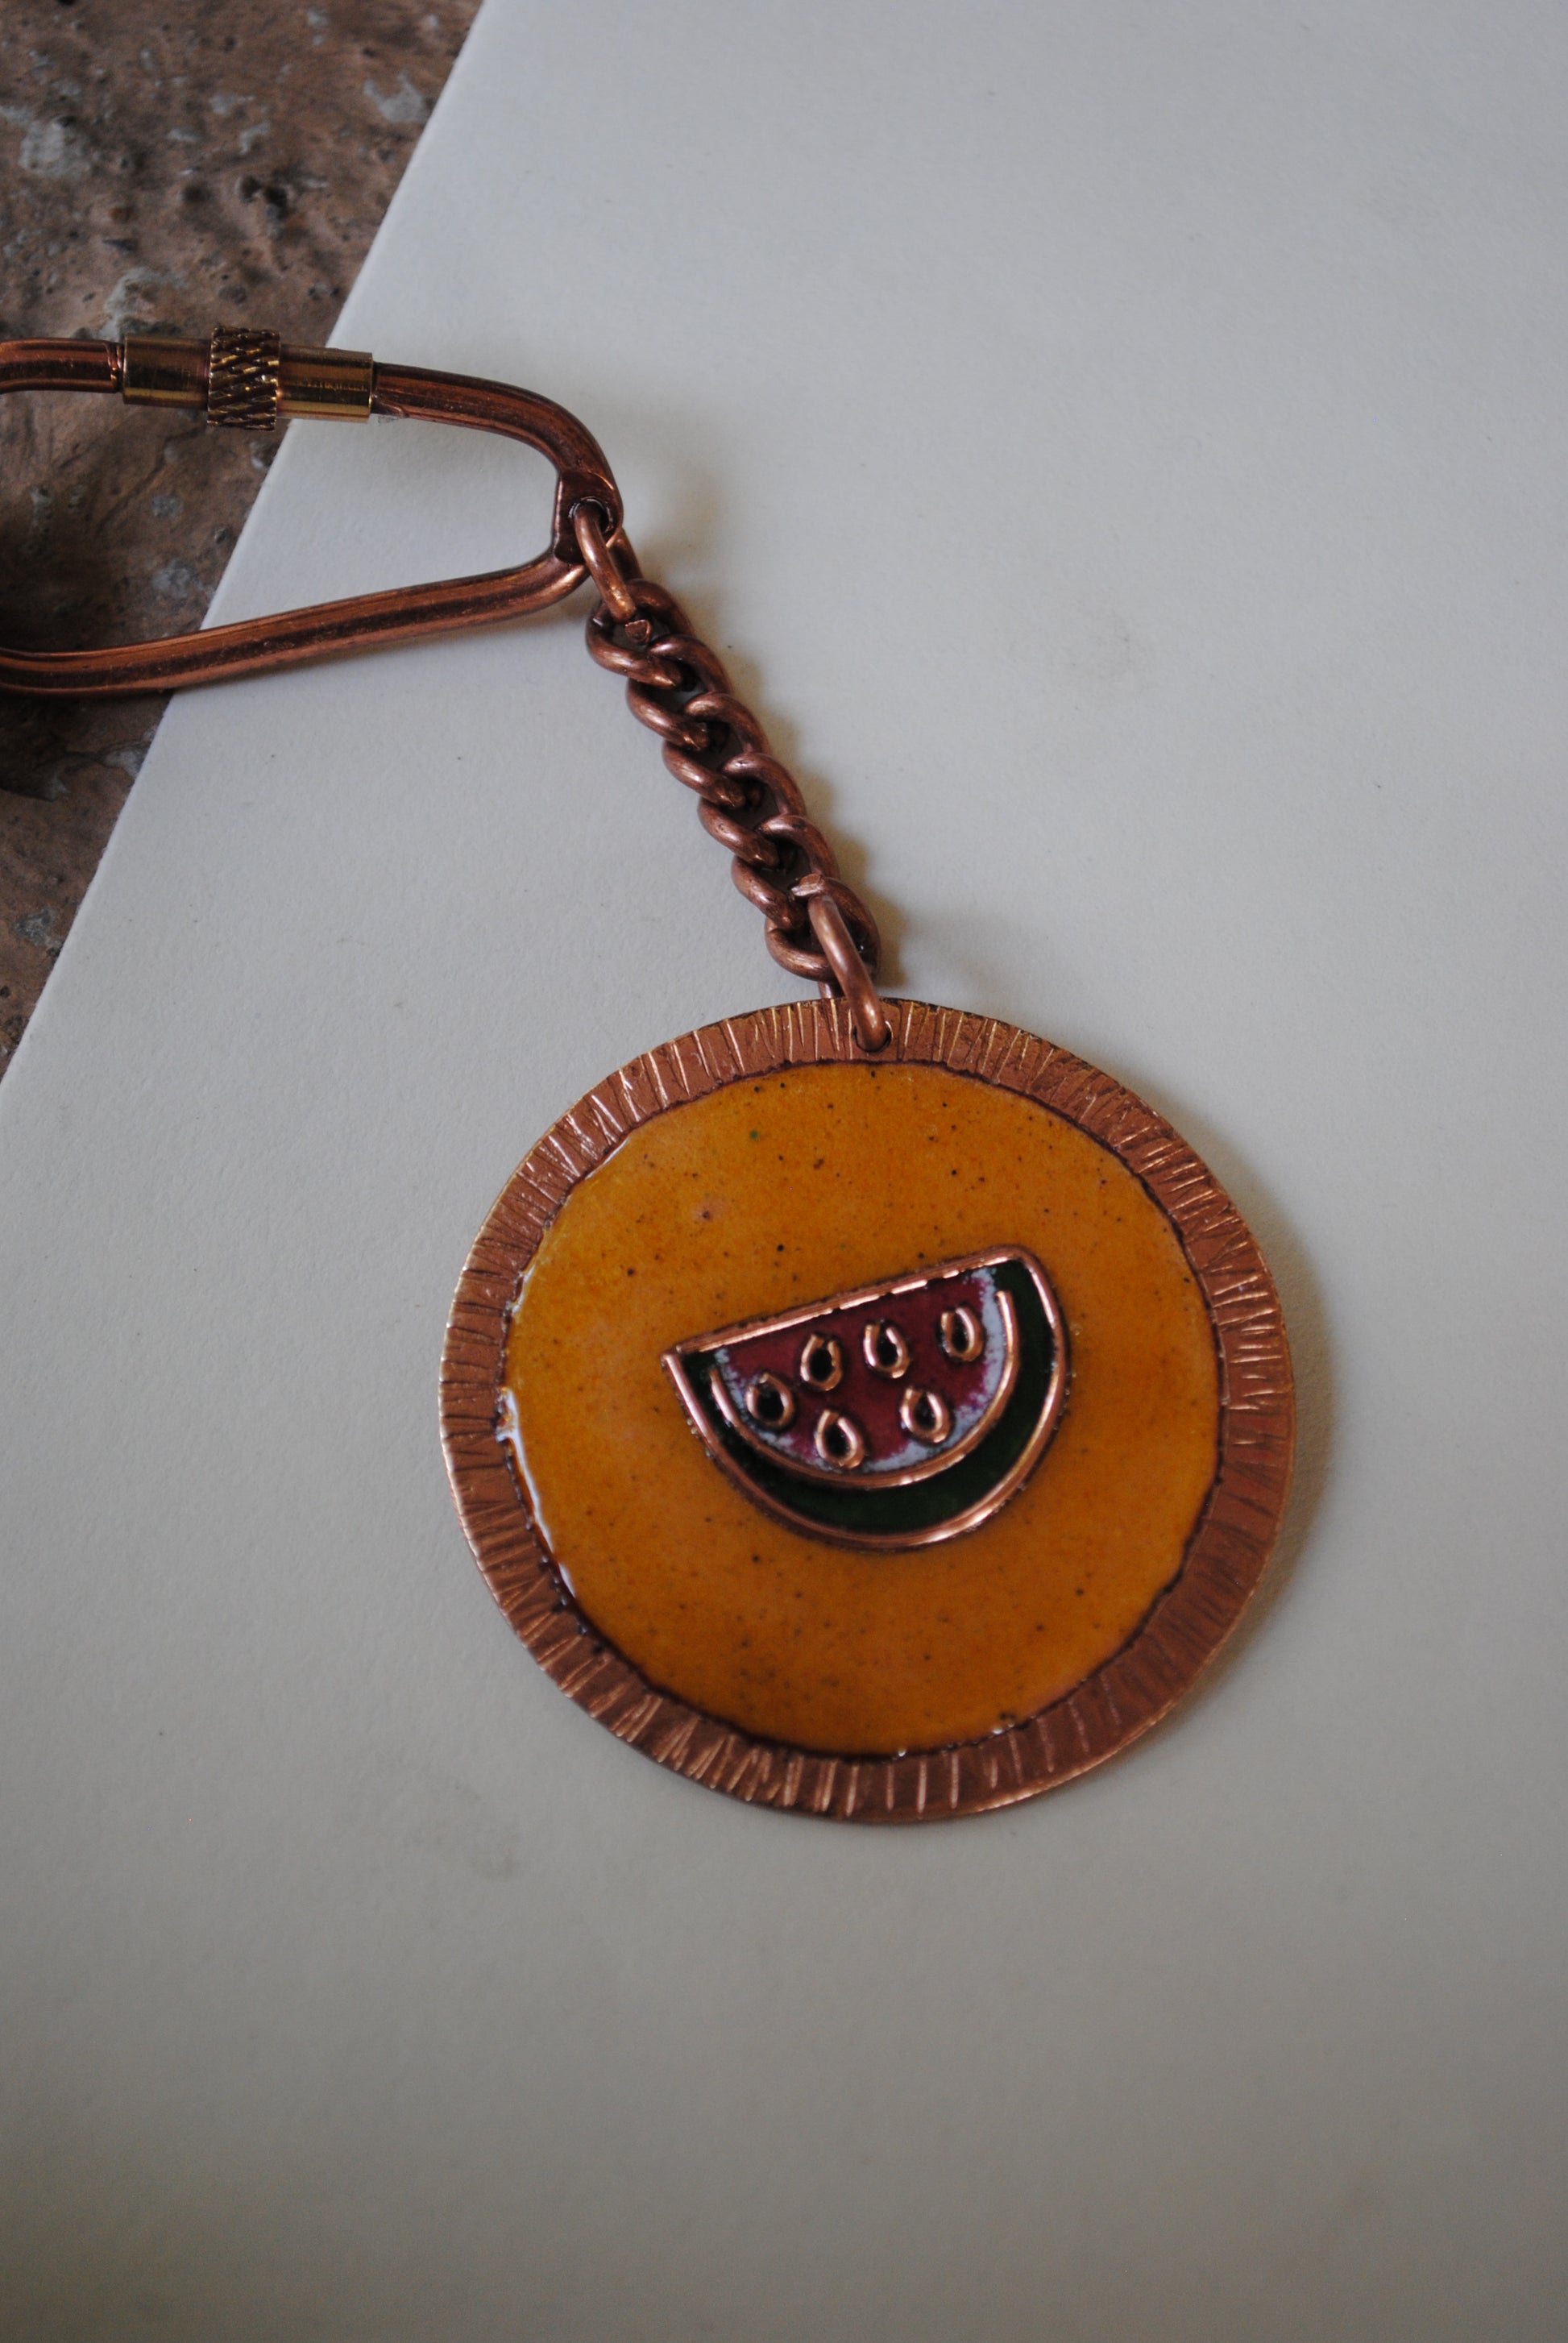 Copper enamel trinkets, funky keychains handcrafted in Maharashtra, India. Tarbooz watermelon theme